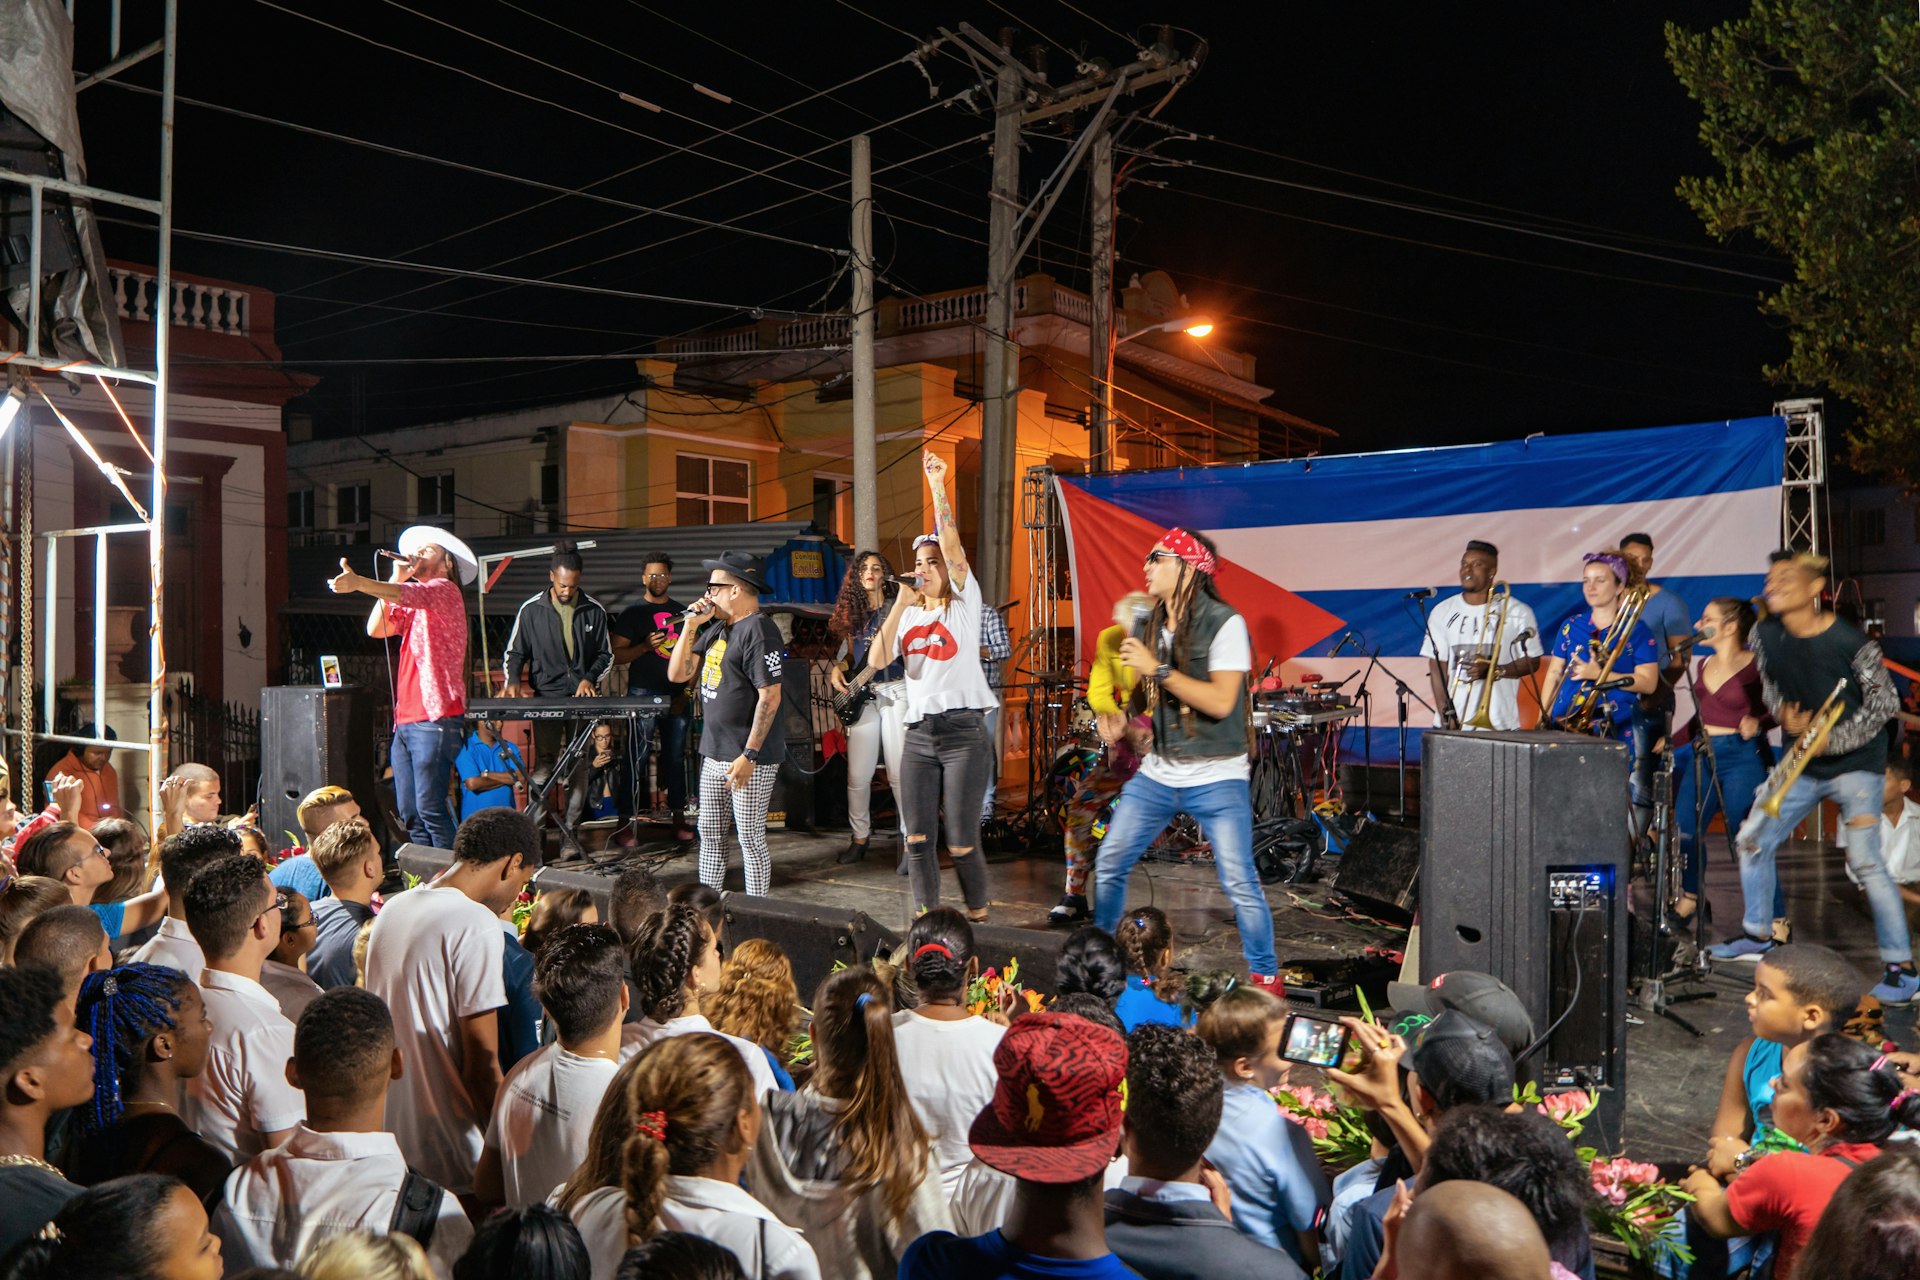 Night performance by the Qva Libre musical group during a public street show in Santa Clara, Cuba